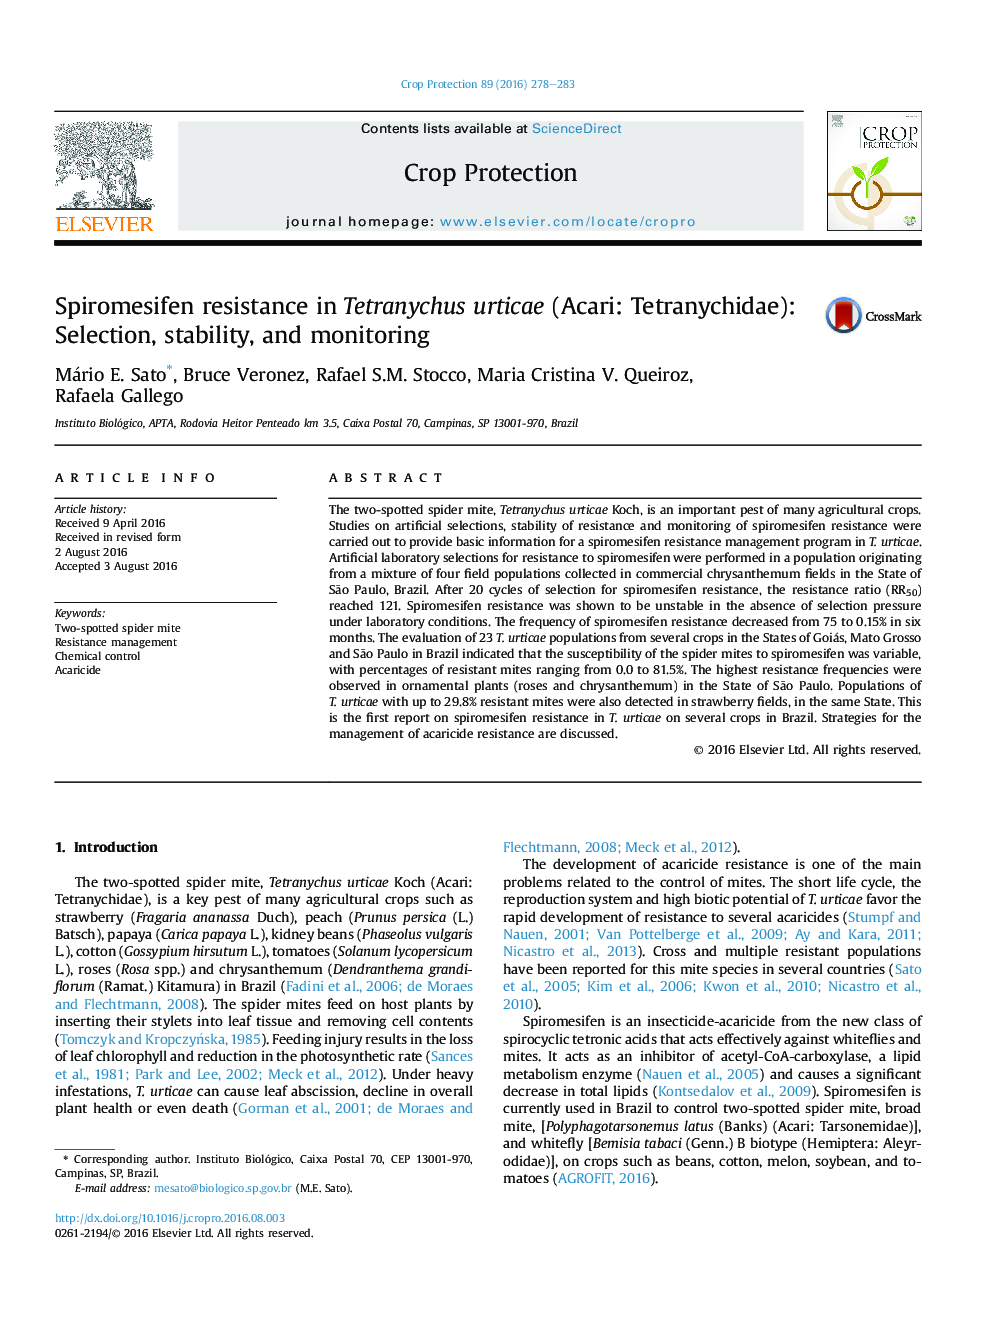 Spiromesifen resistance in Tetranychus urticae (Acari: Tetranychidae): Selection, stability, and monitoring